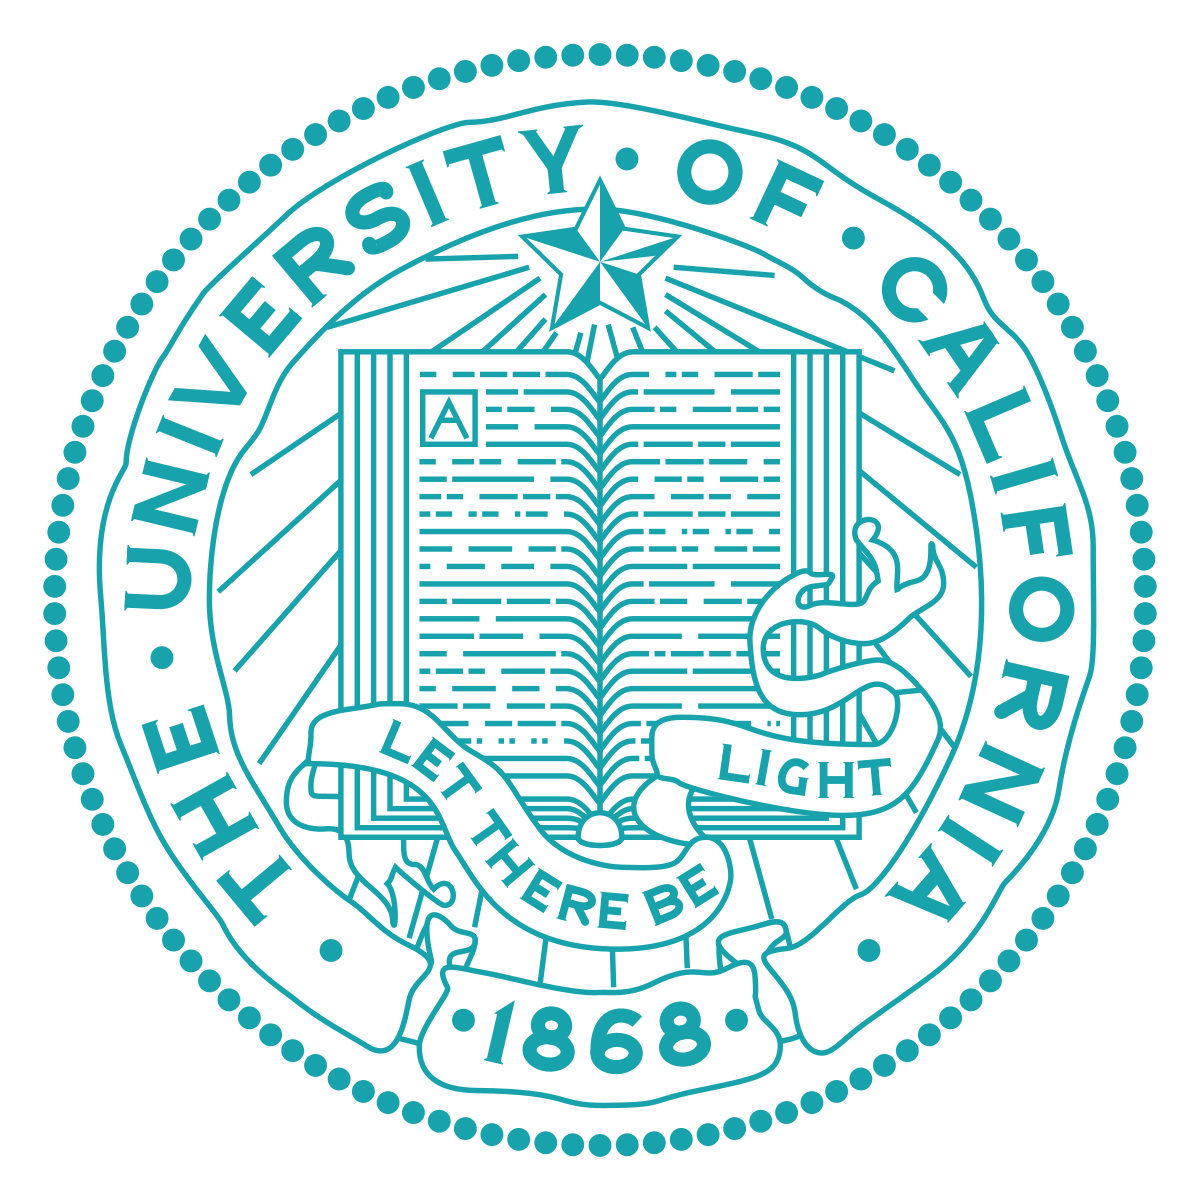 The University of California 1868 seal.